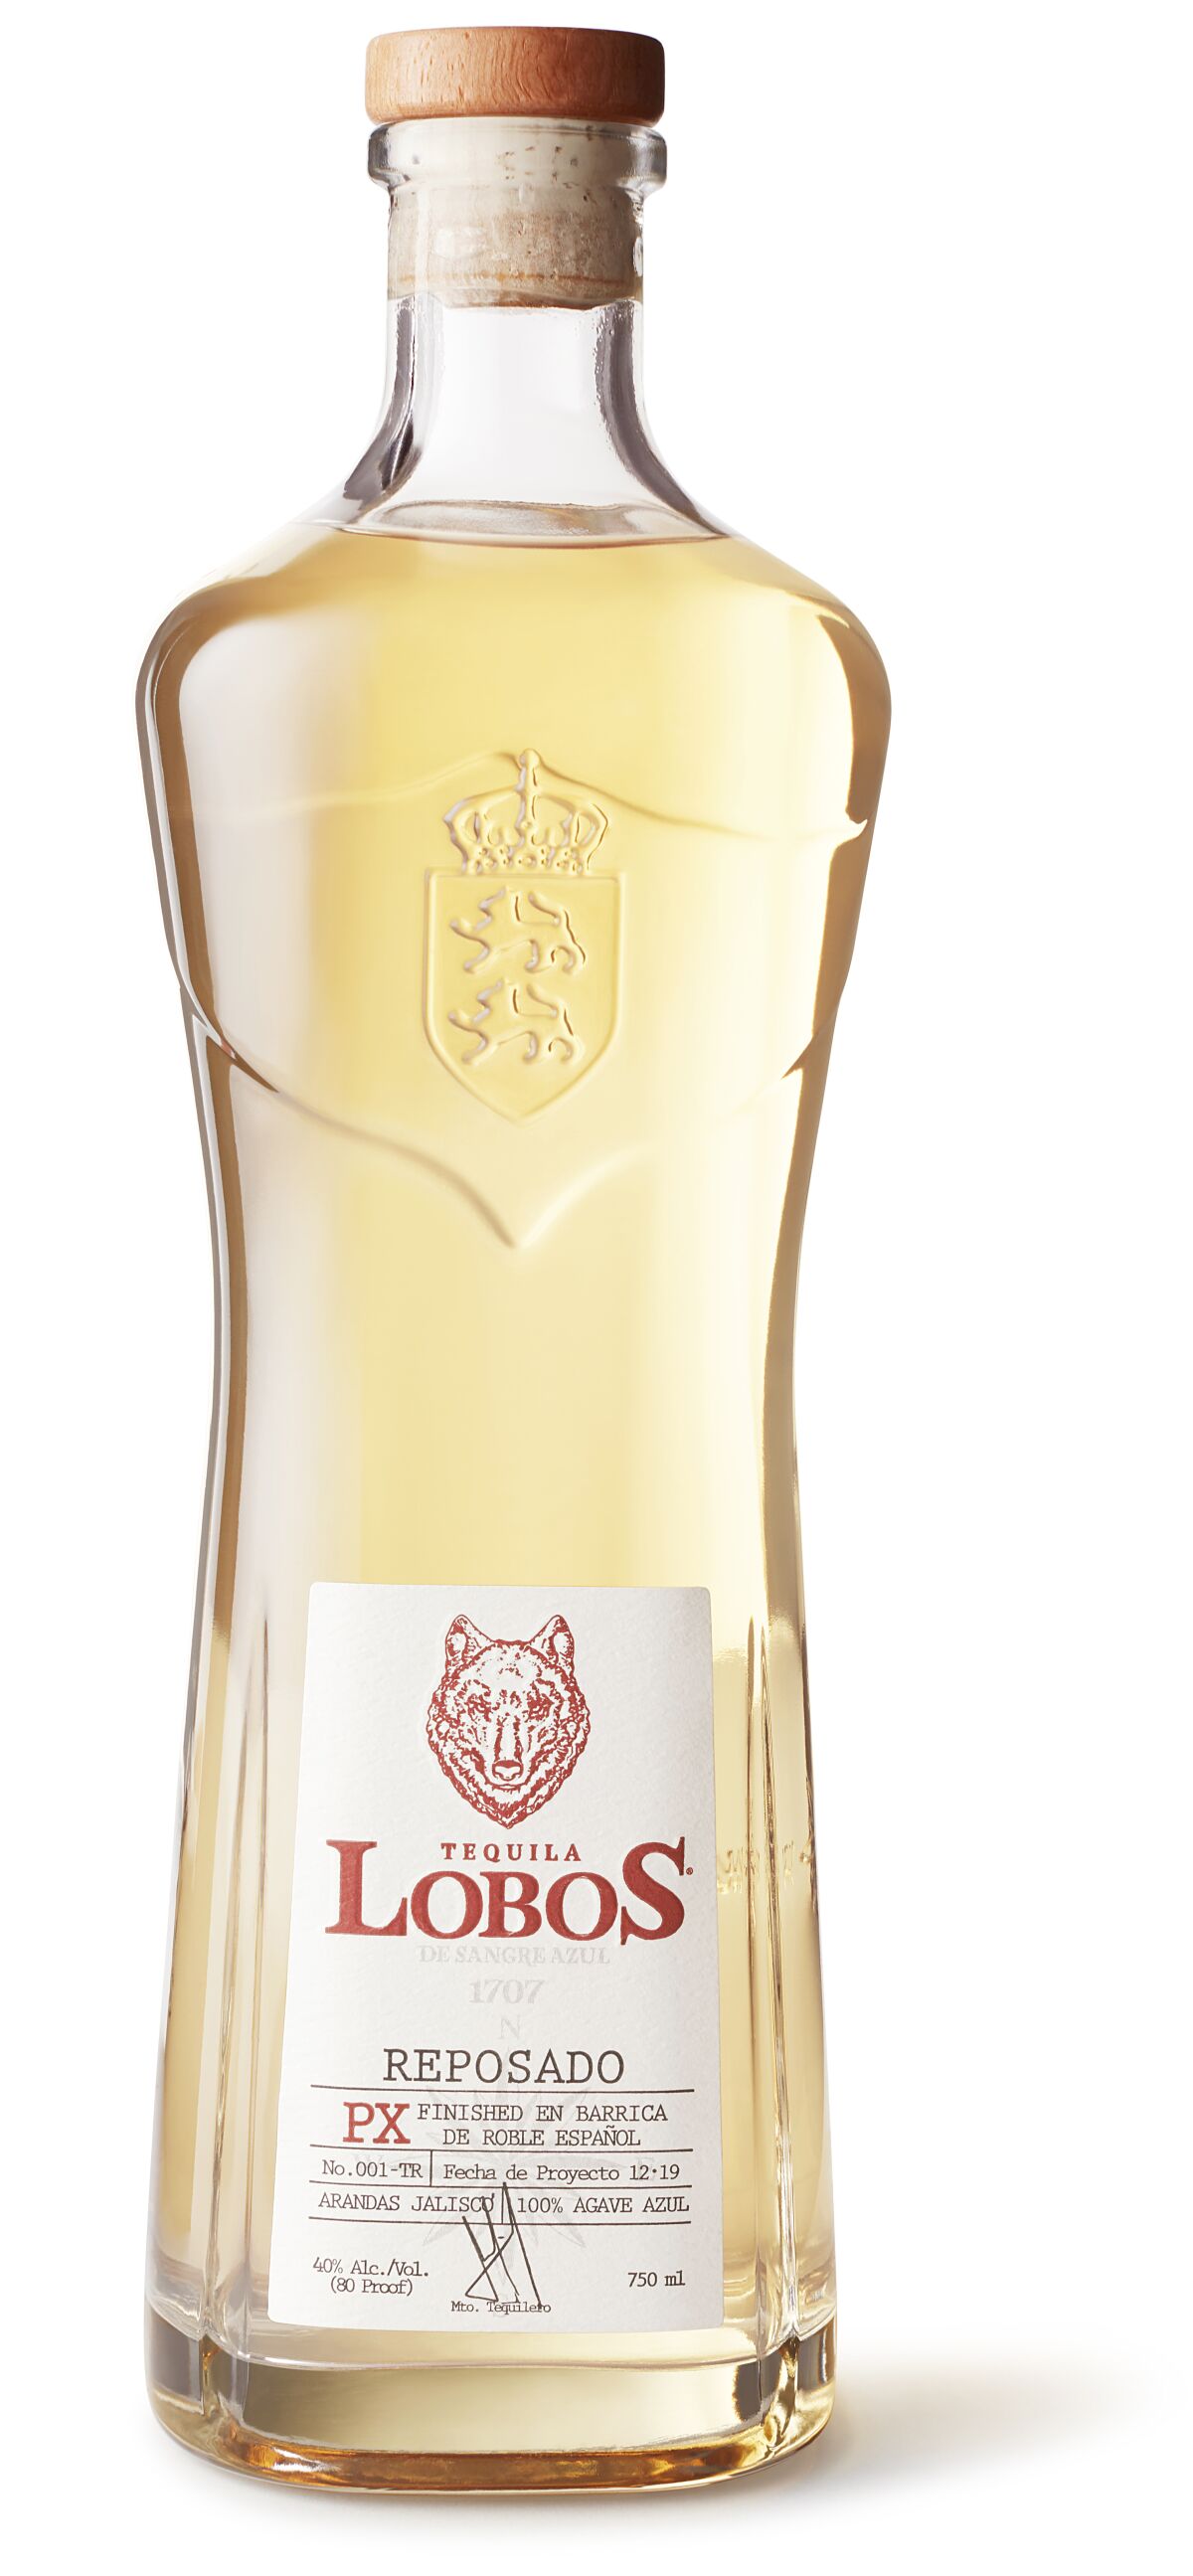 A bottle of Lobos 1707 Tequila Reposado.